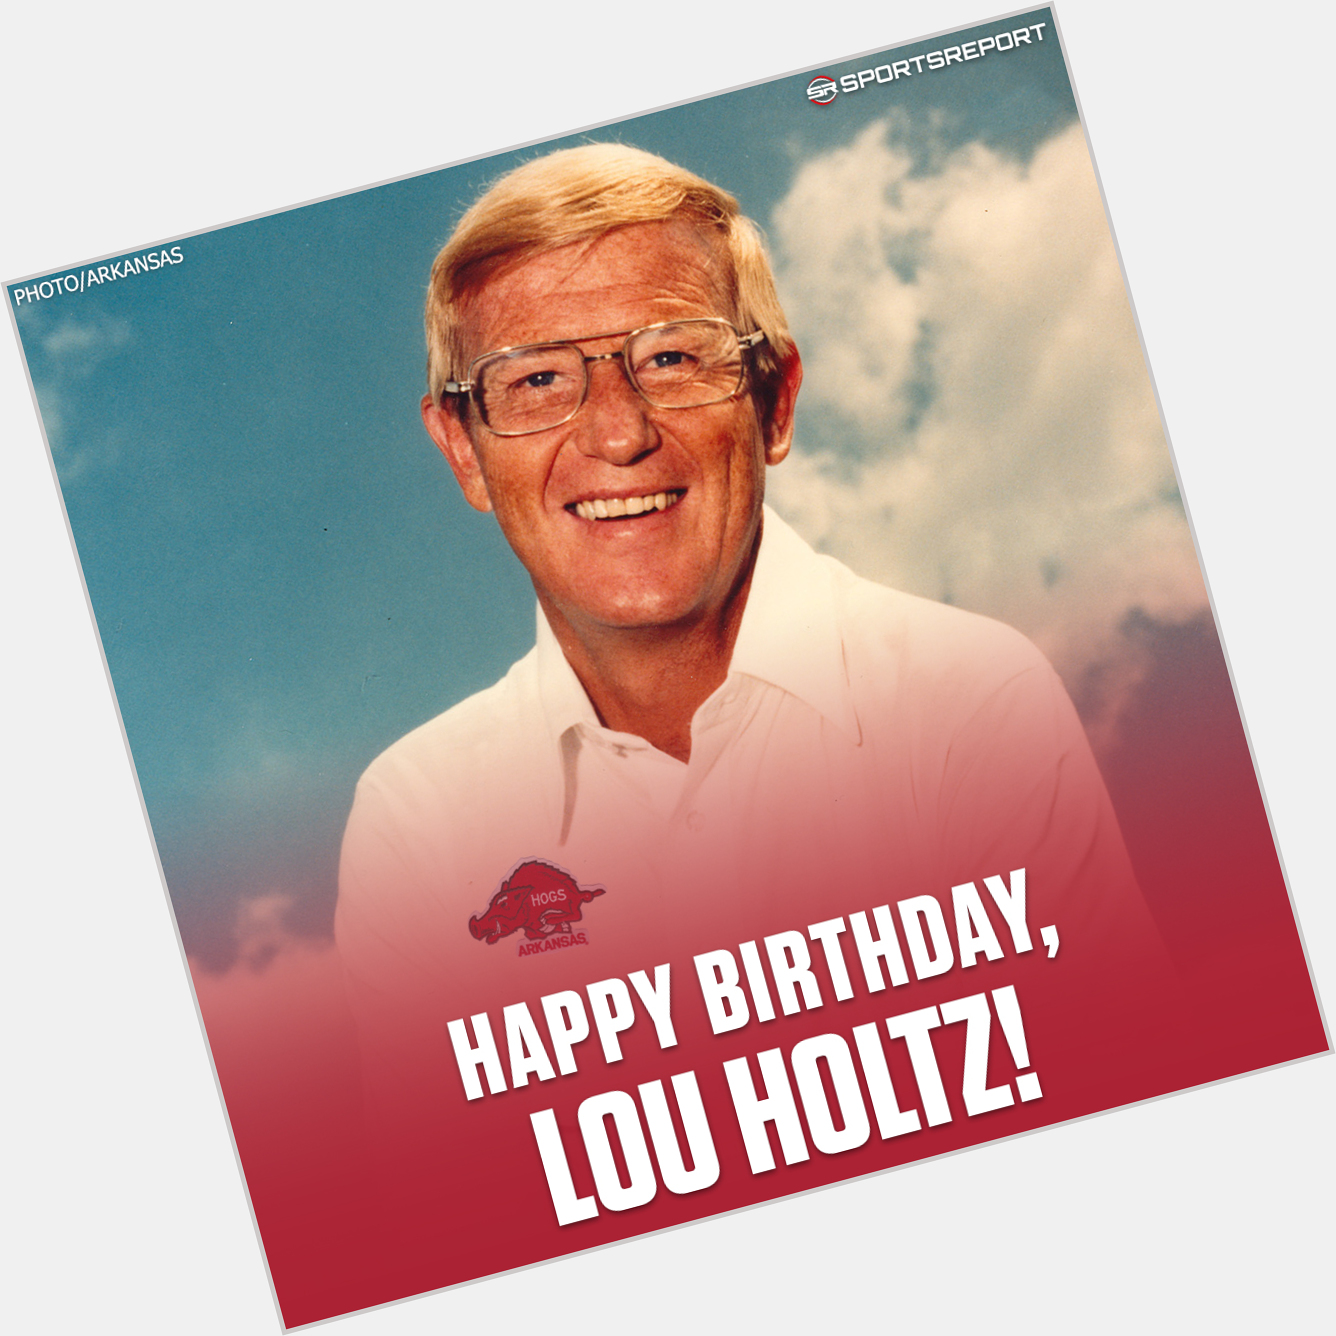 Happy Birthday to Coaching Legend, Lou Holtz! 